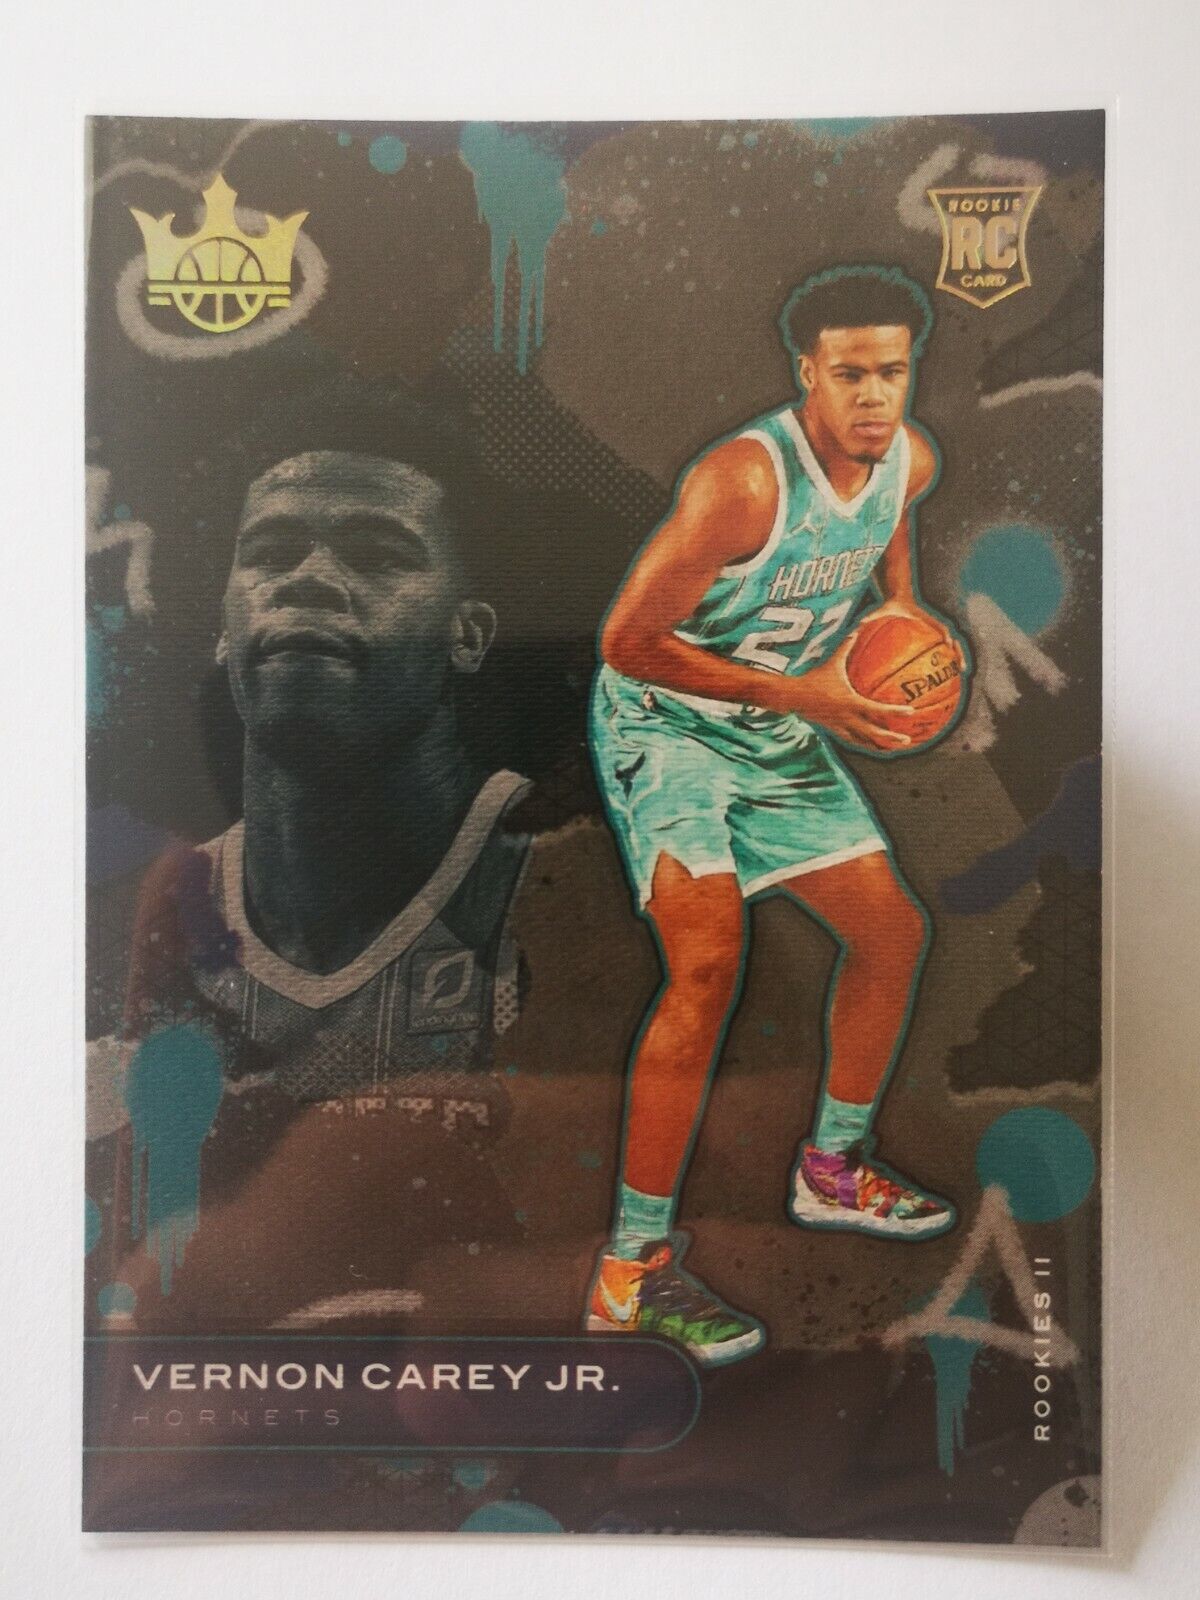 2020-21 Panini Court Kings N31 Card RC Rookie Vernon Carey Jr. #102 Hornets